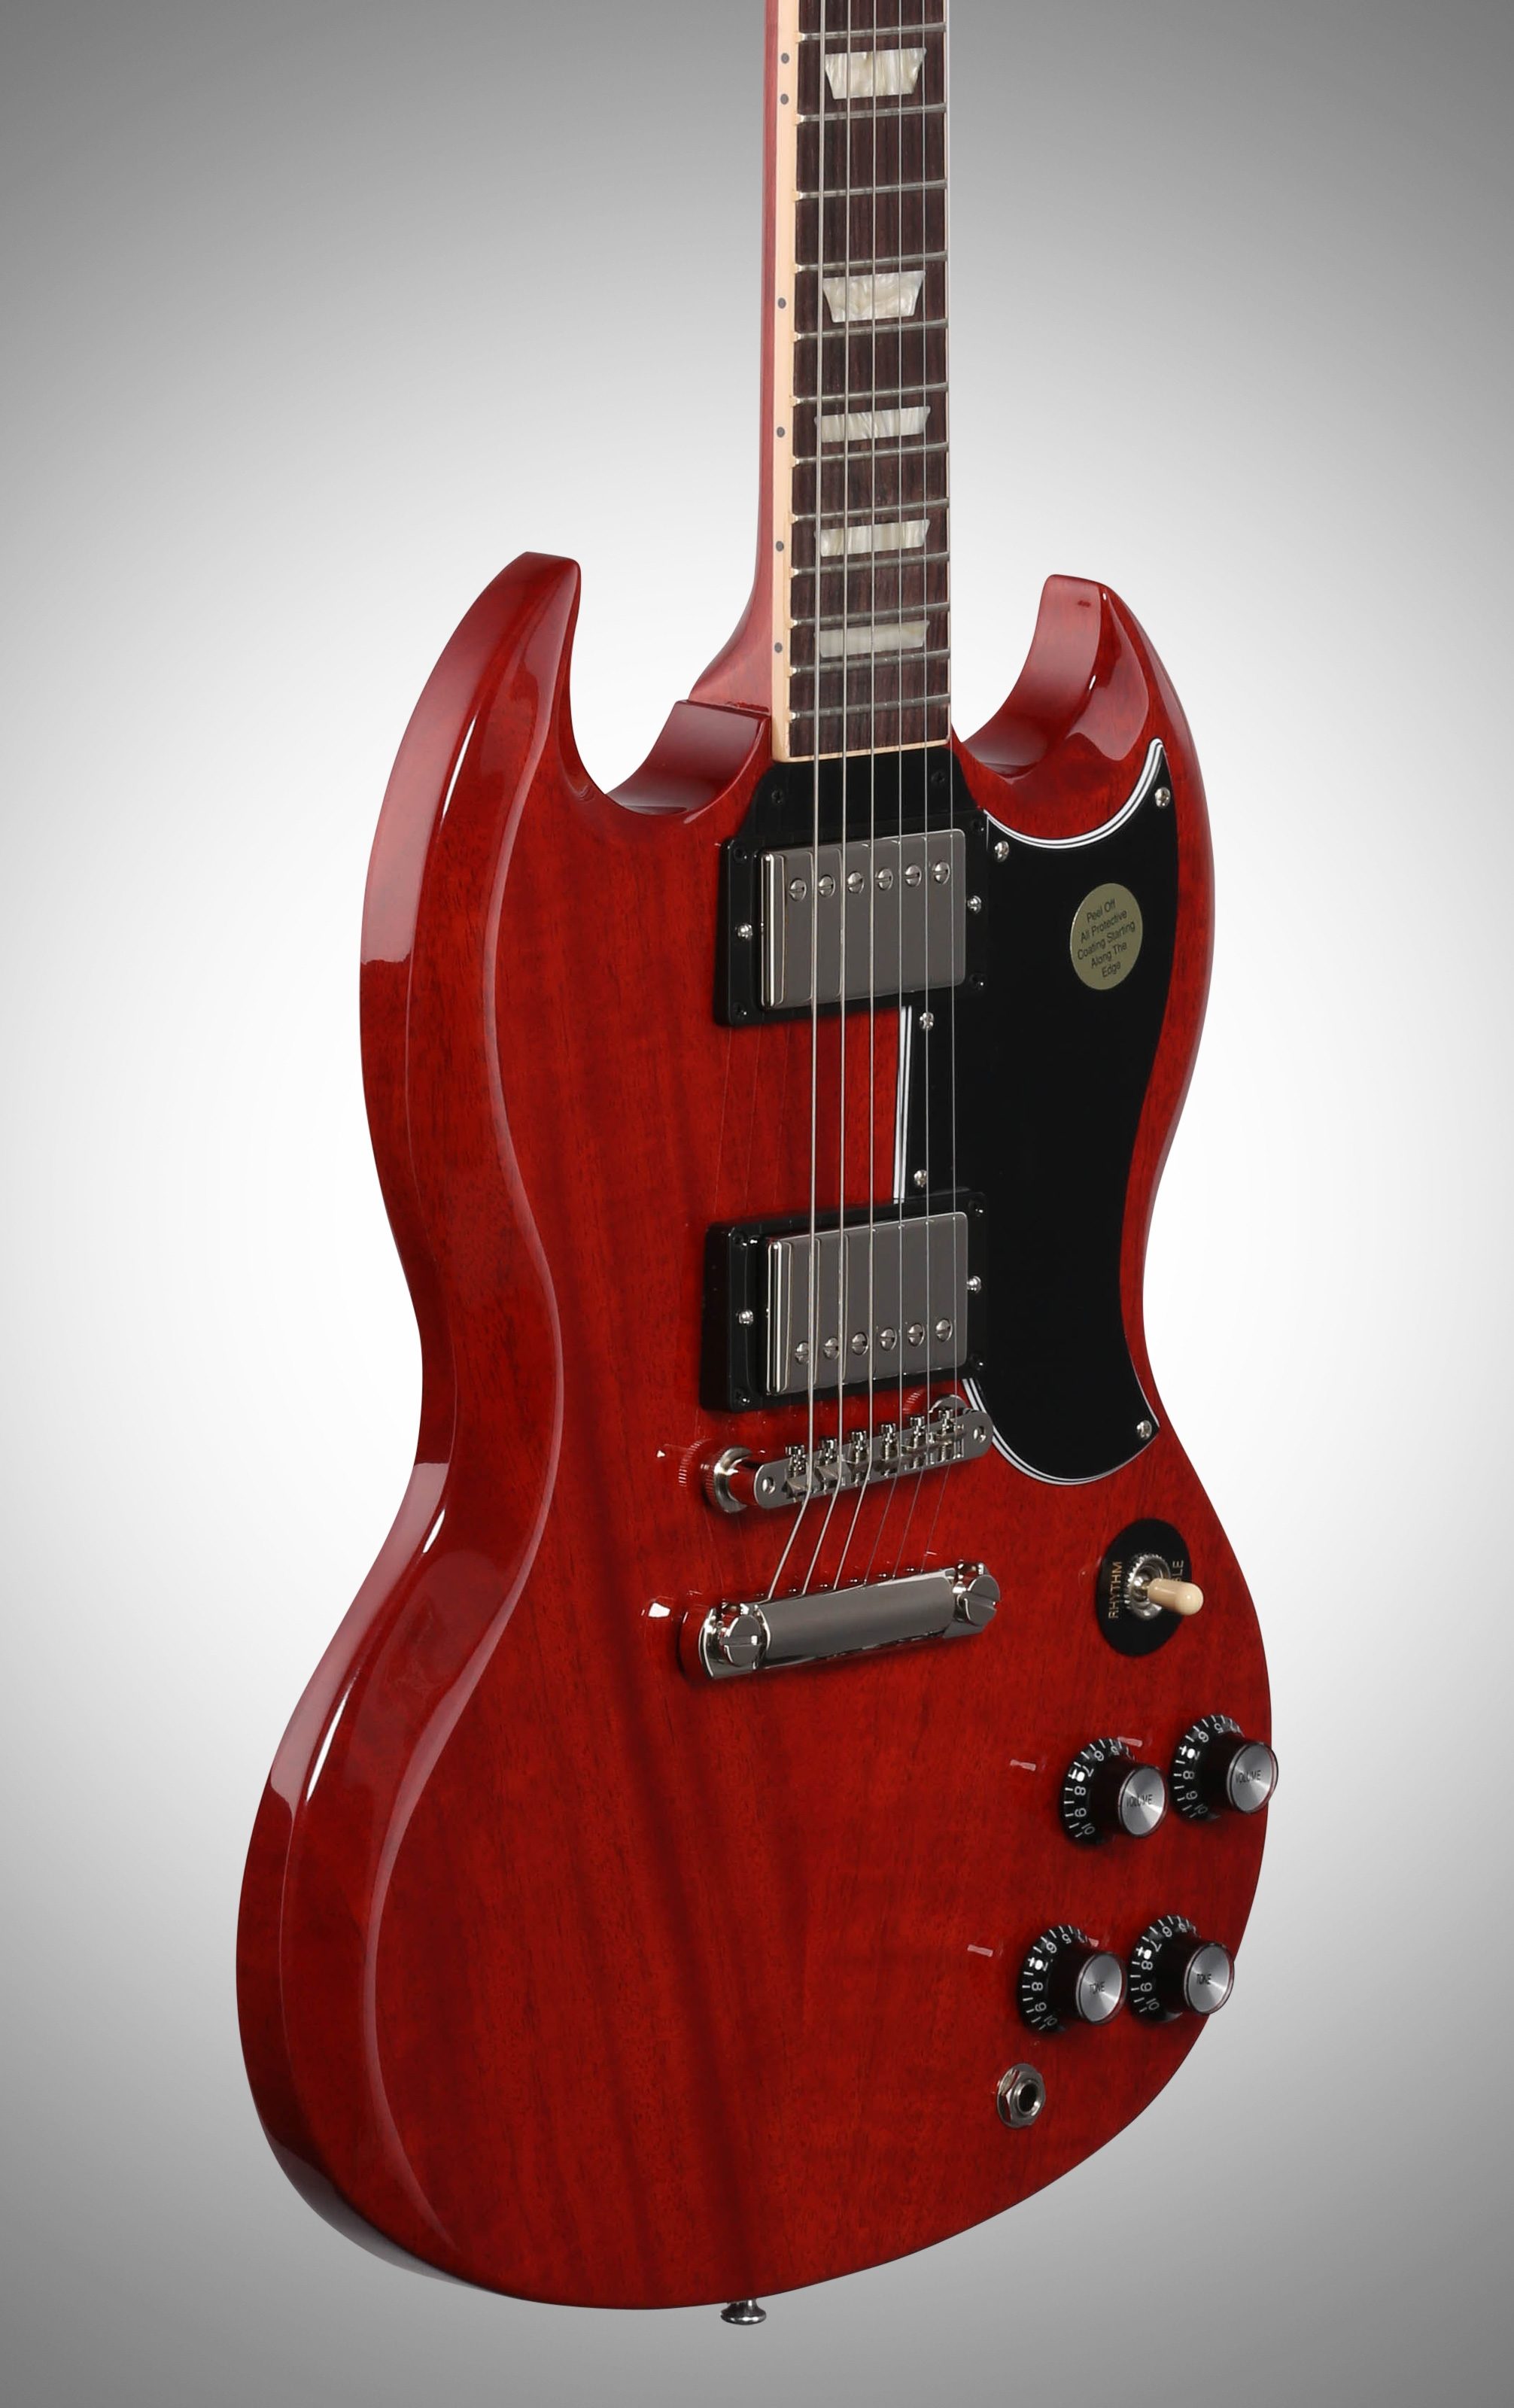 Gibson SG Standard '61 Electric Guitar zZounds